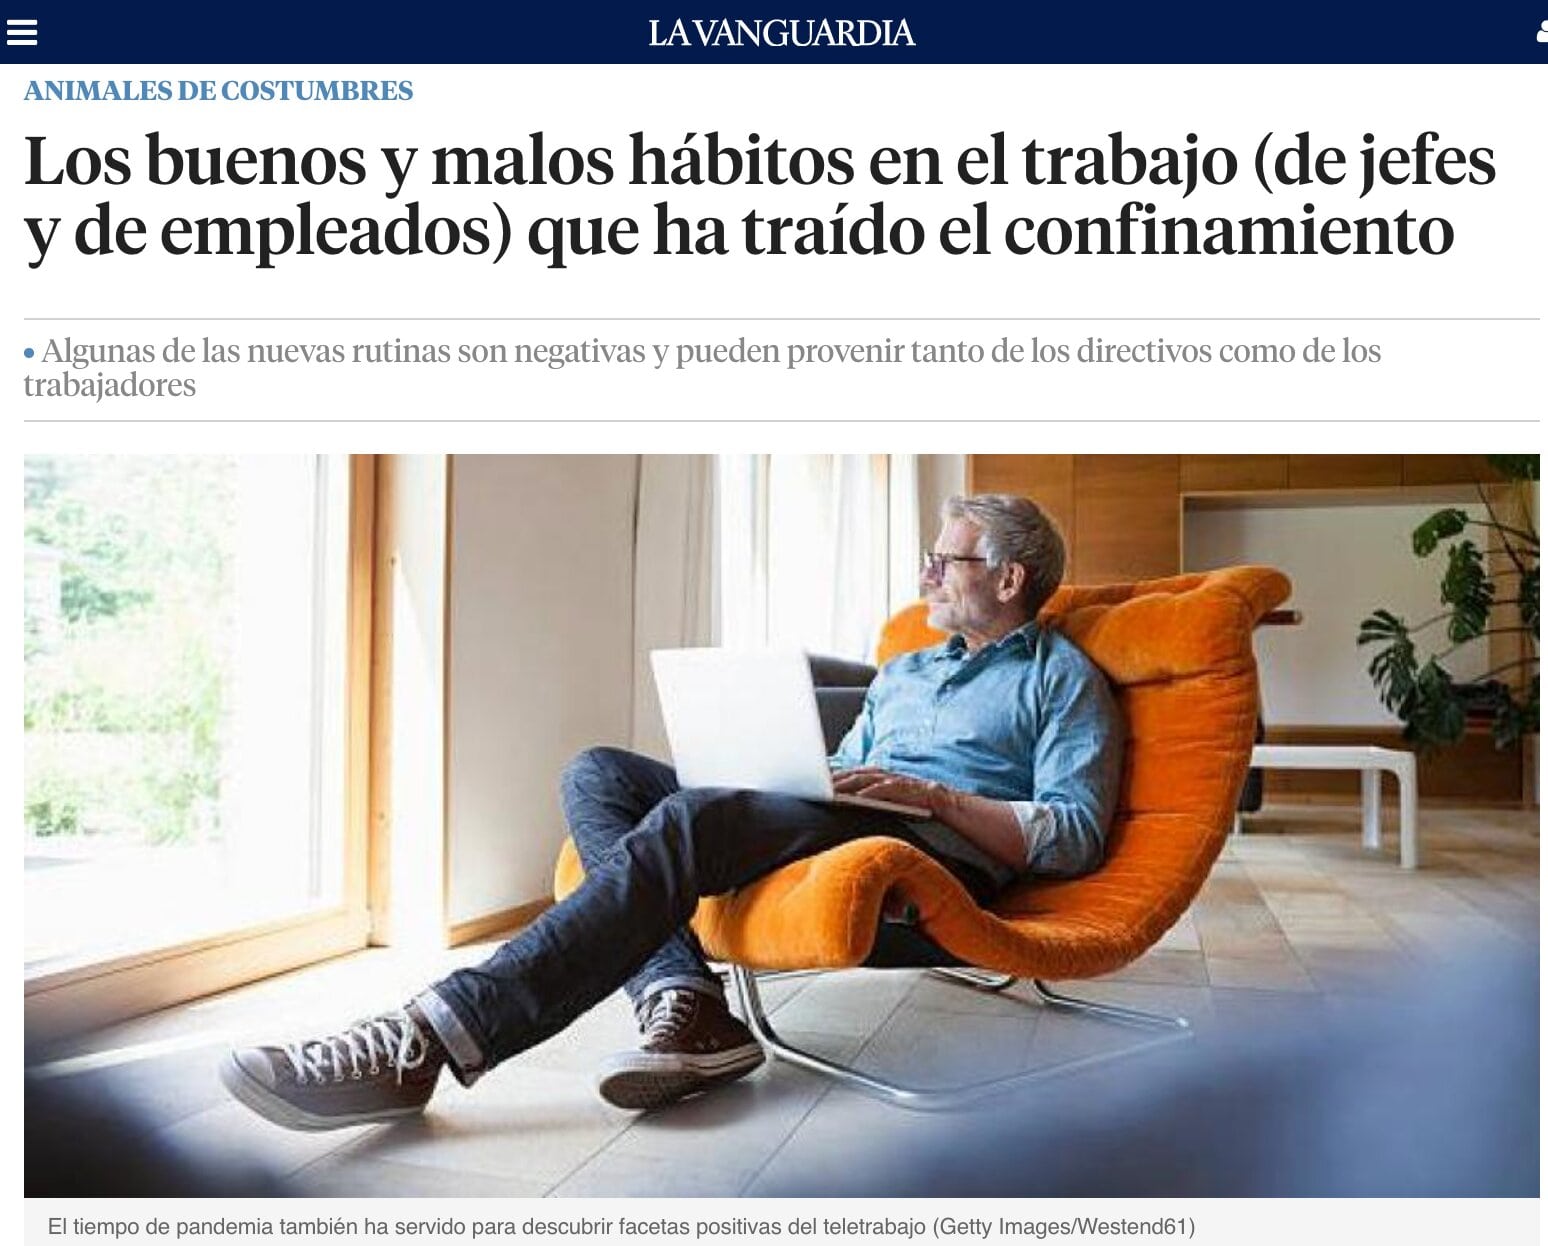 La Vanguardia interview